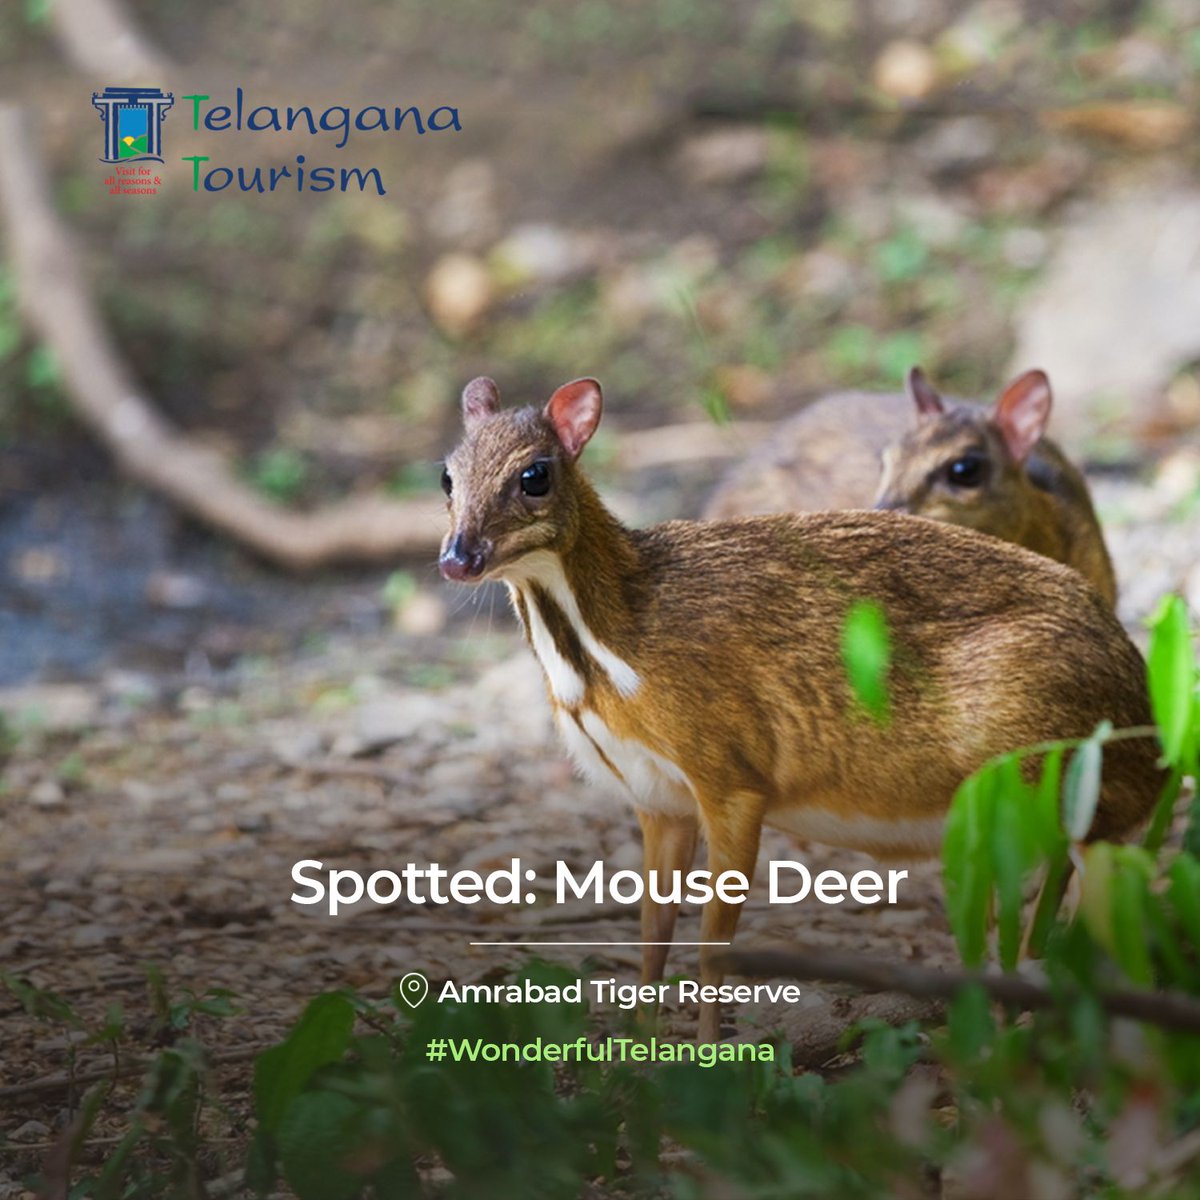 Re-introduced and nurtured, the elusive Mouse Deer found its place in the vast expanses of Amrabad Tiger Reserve. 

#WonderfulTelangana #AmrabadTigerReserve #EcoTourism #ProjectTiger #TelanganaToursim #Telangana